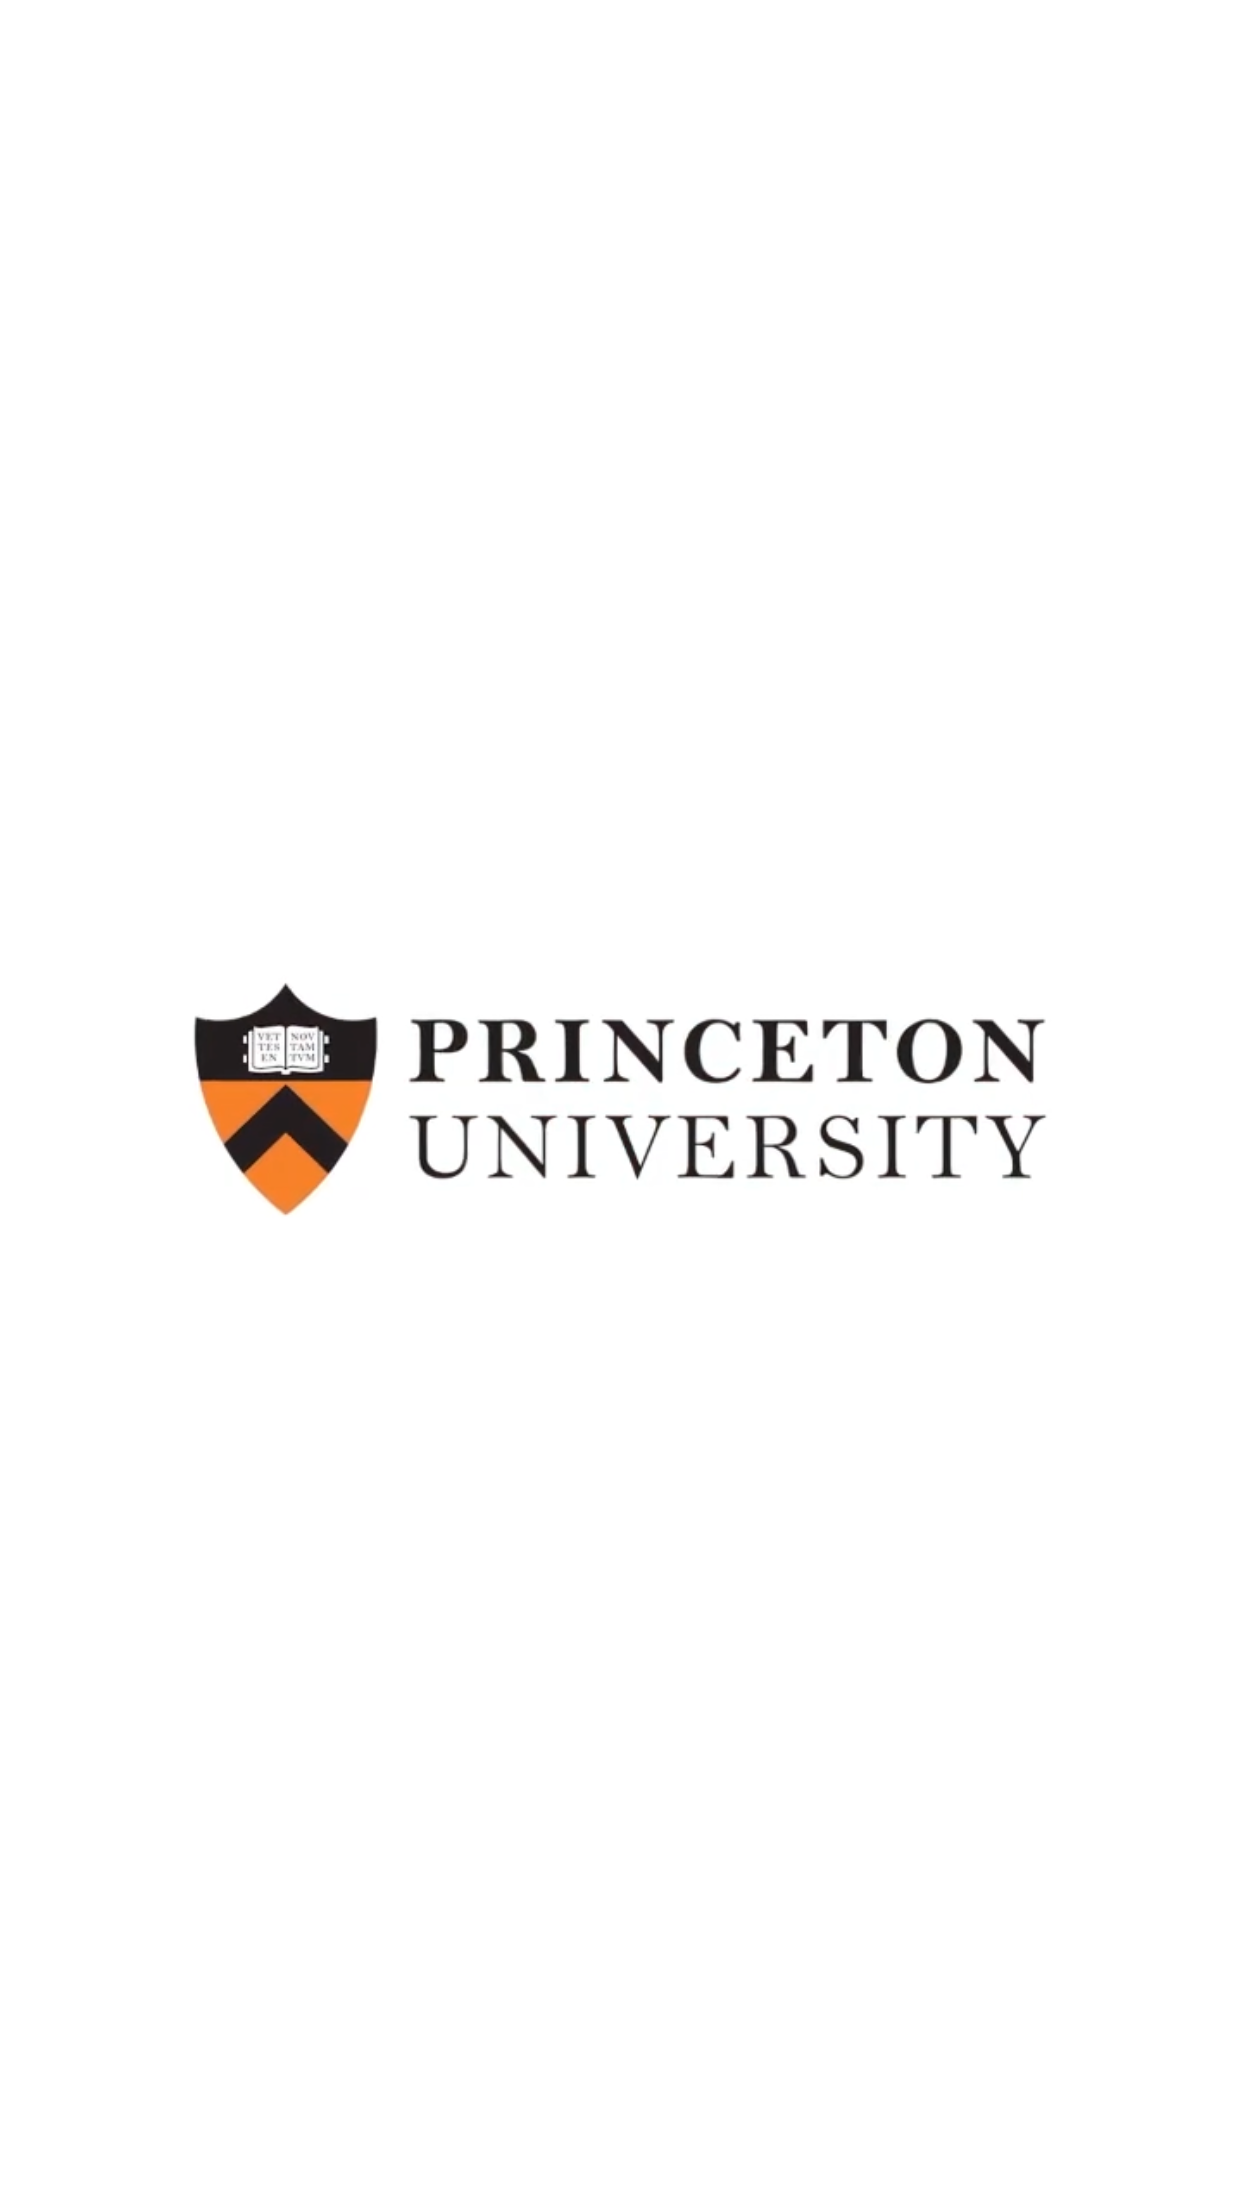 Princeton University Wallpaper Free Princeton University Background